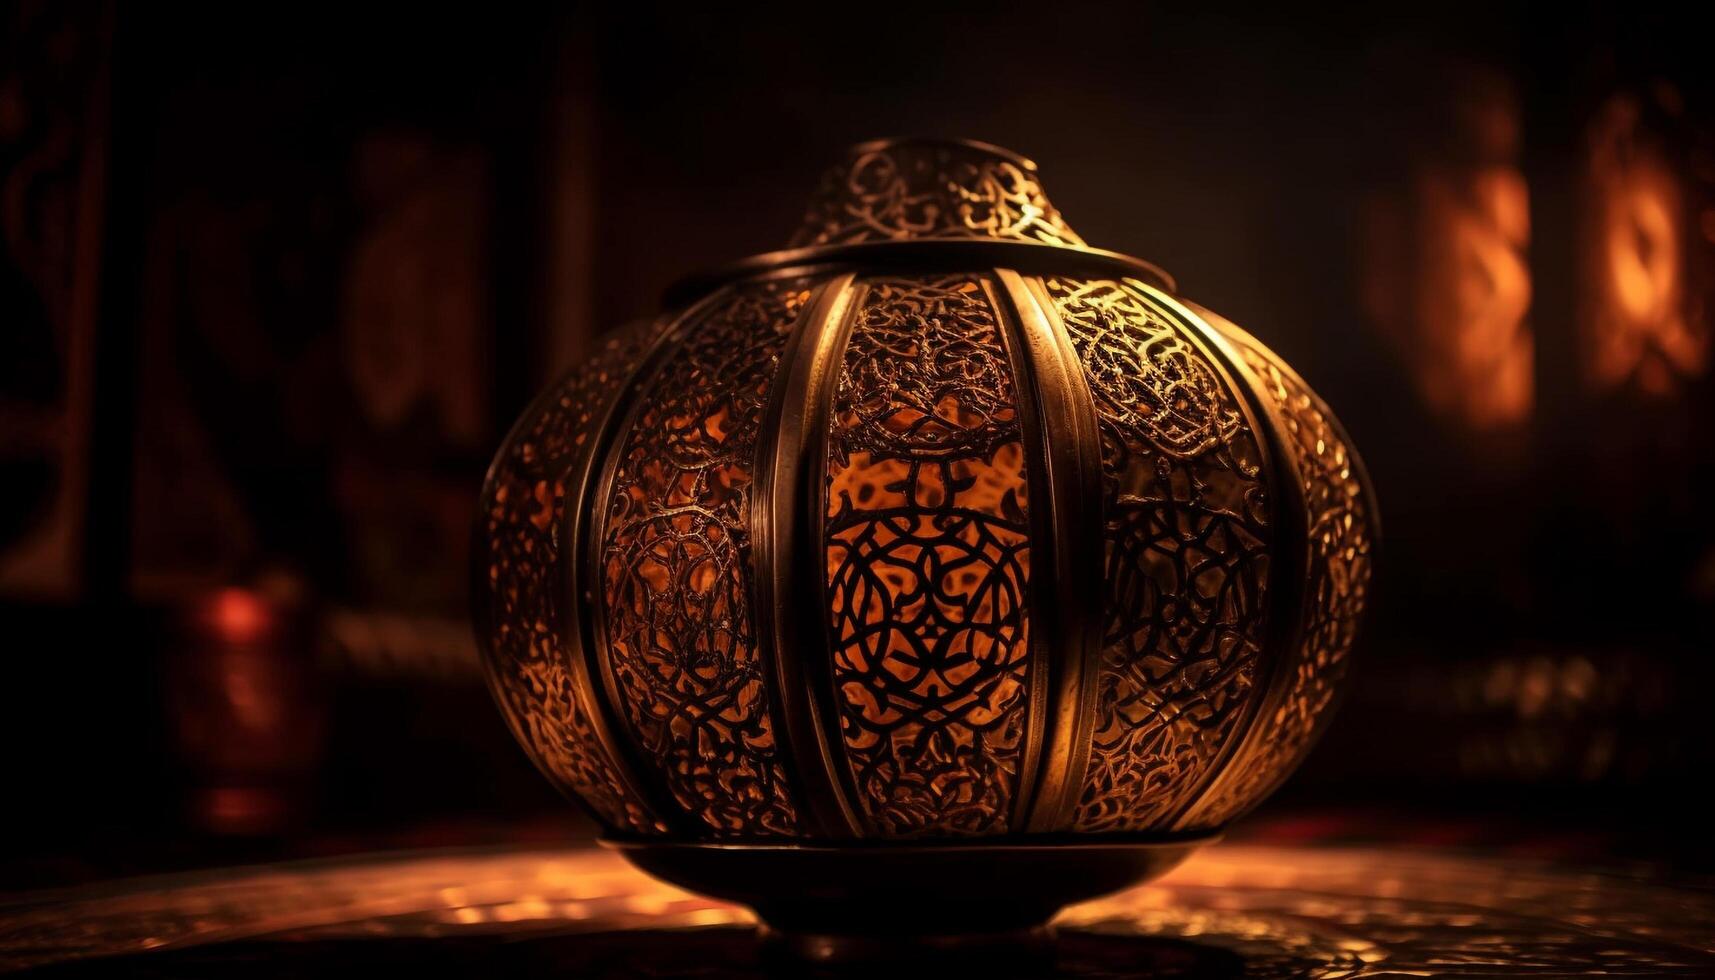 Ancient lantern illuminated dark, ornate Turkish souvenir generated by AI photo